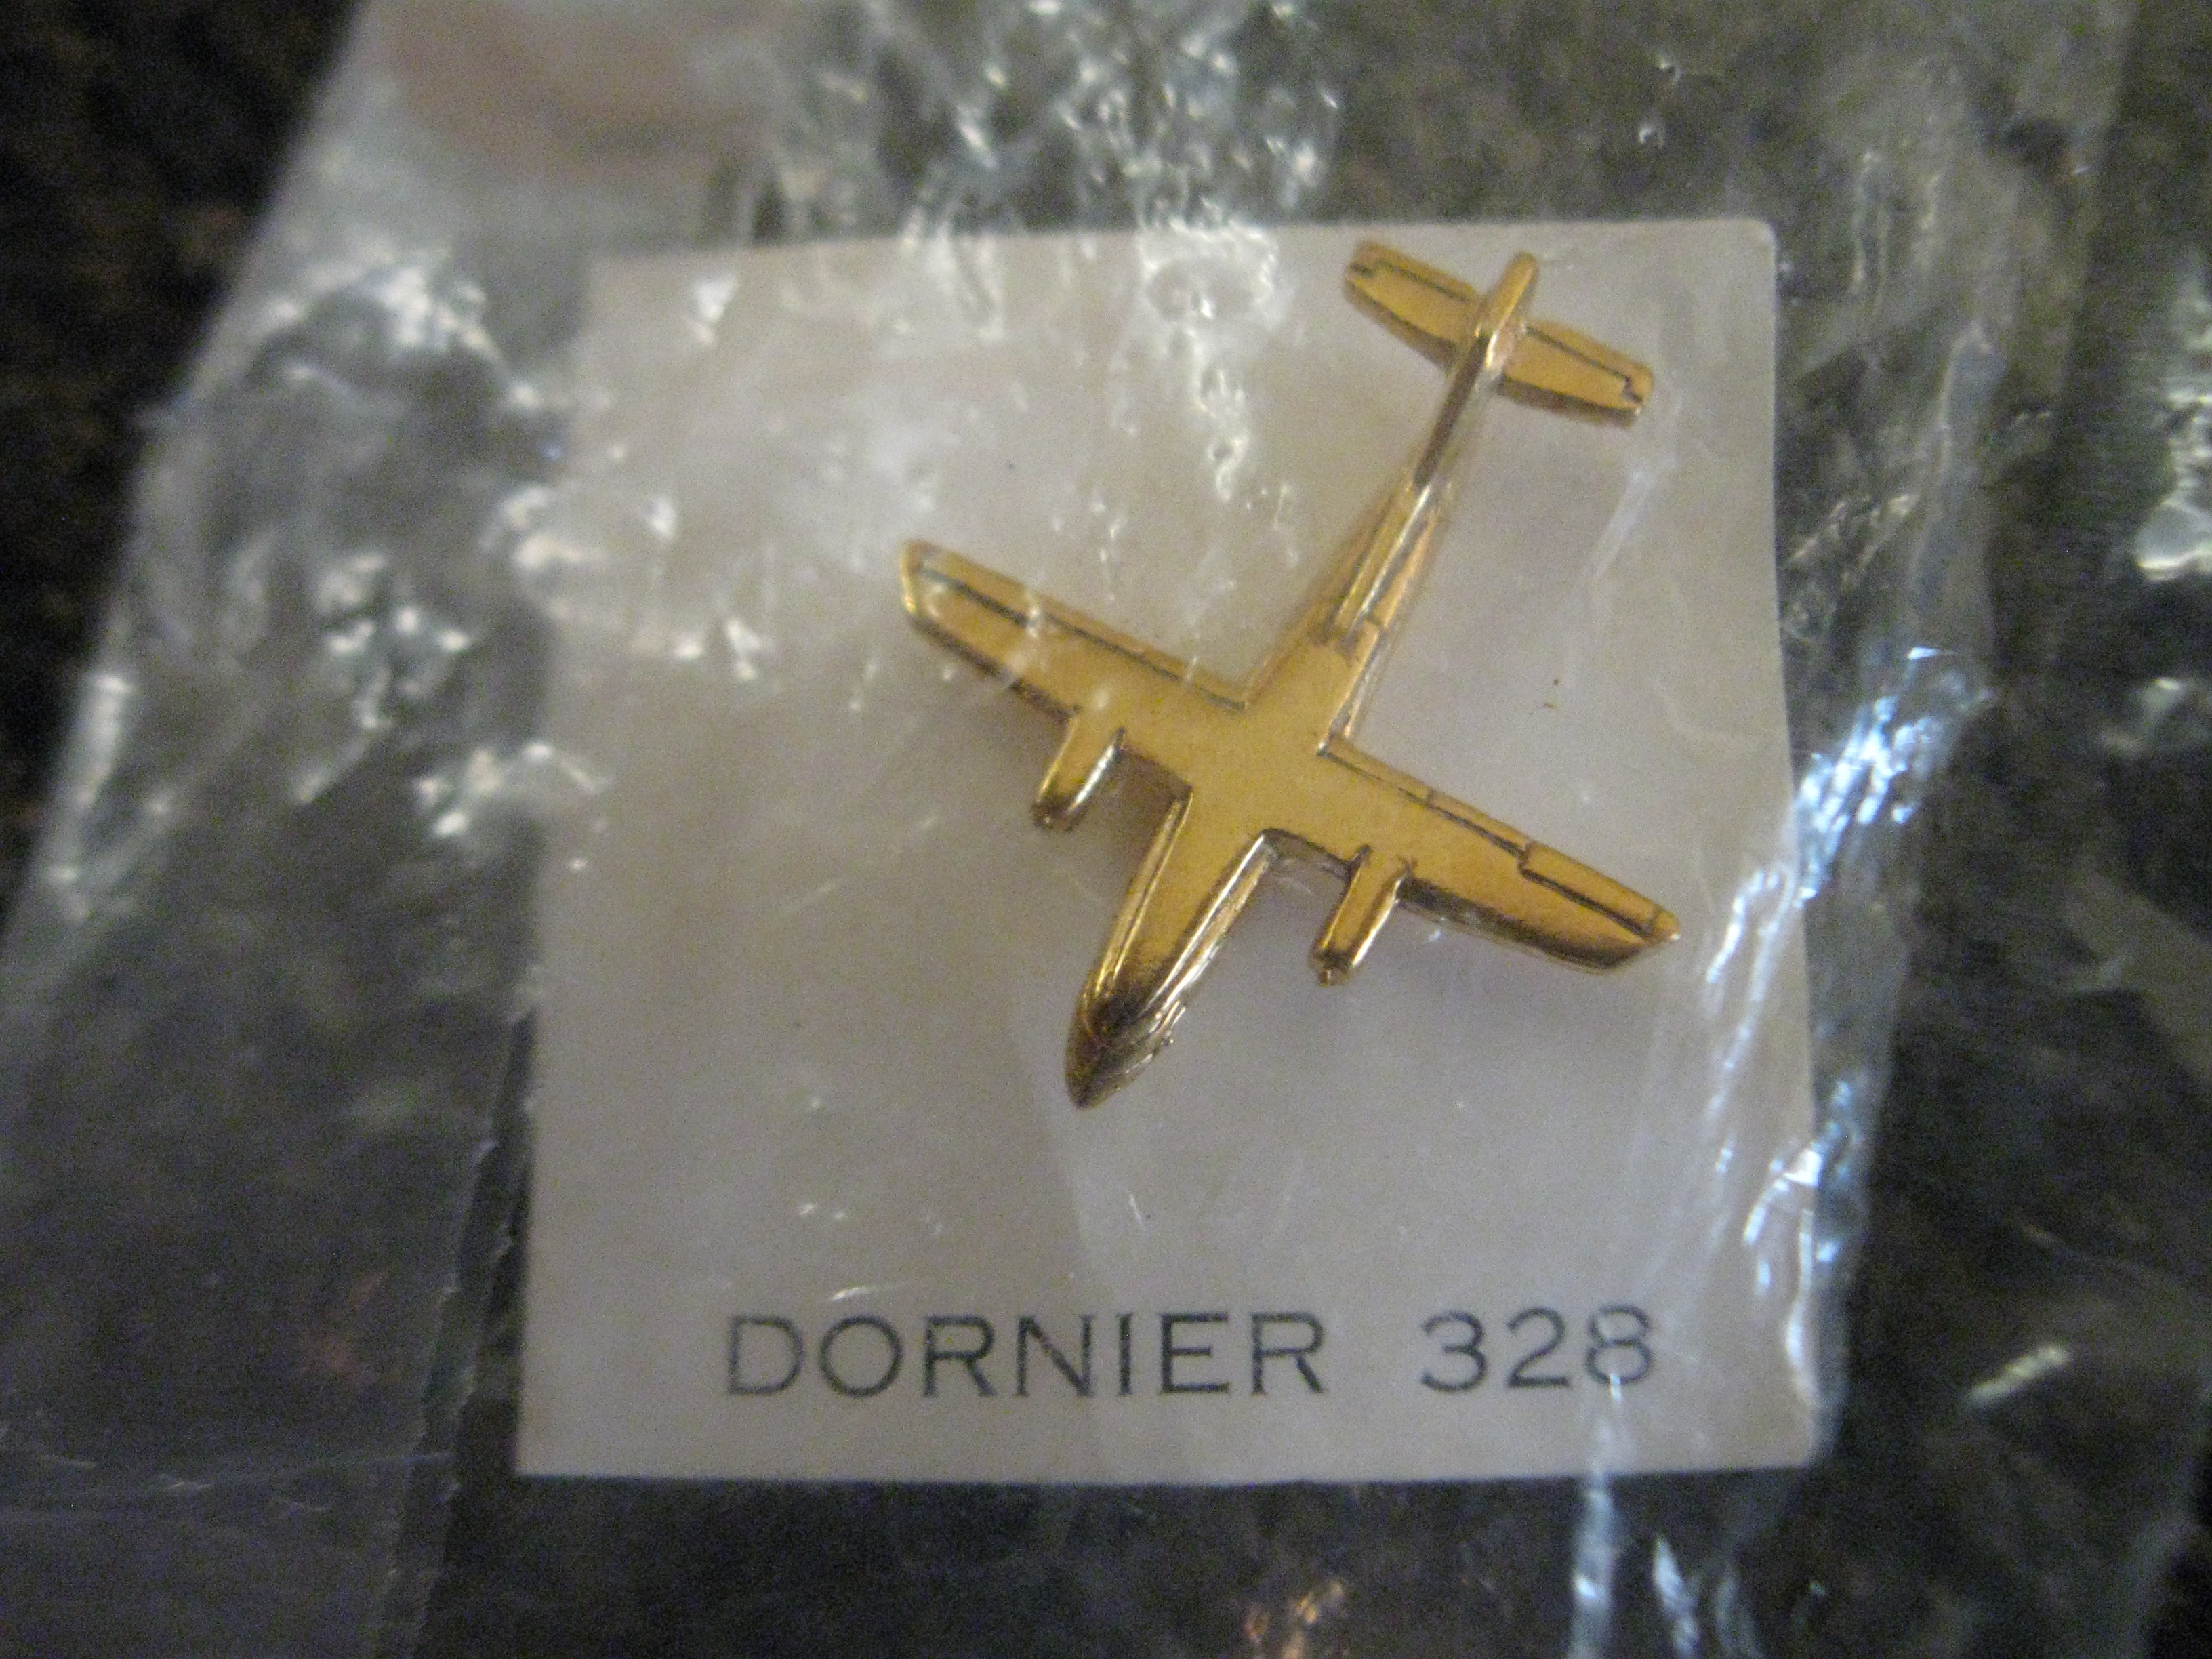 Dornier 328 pin